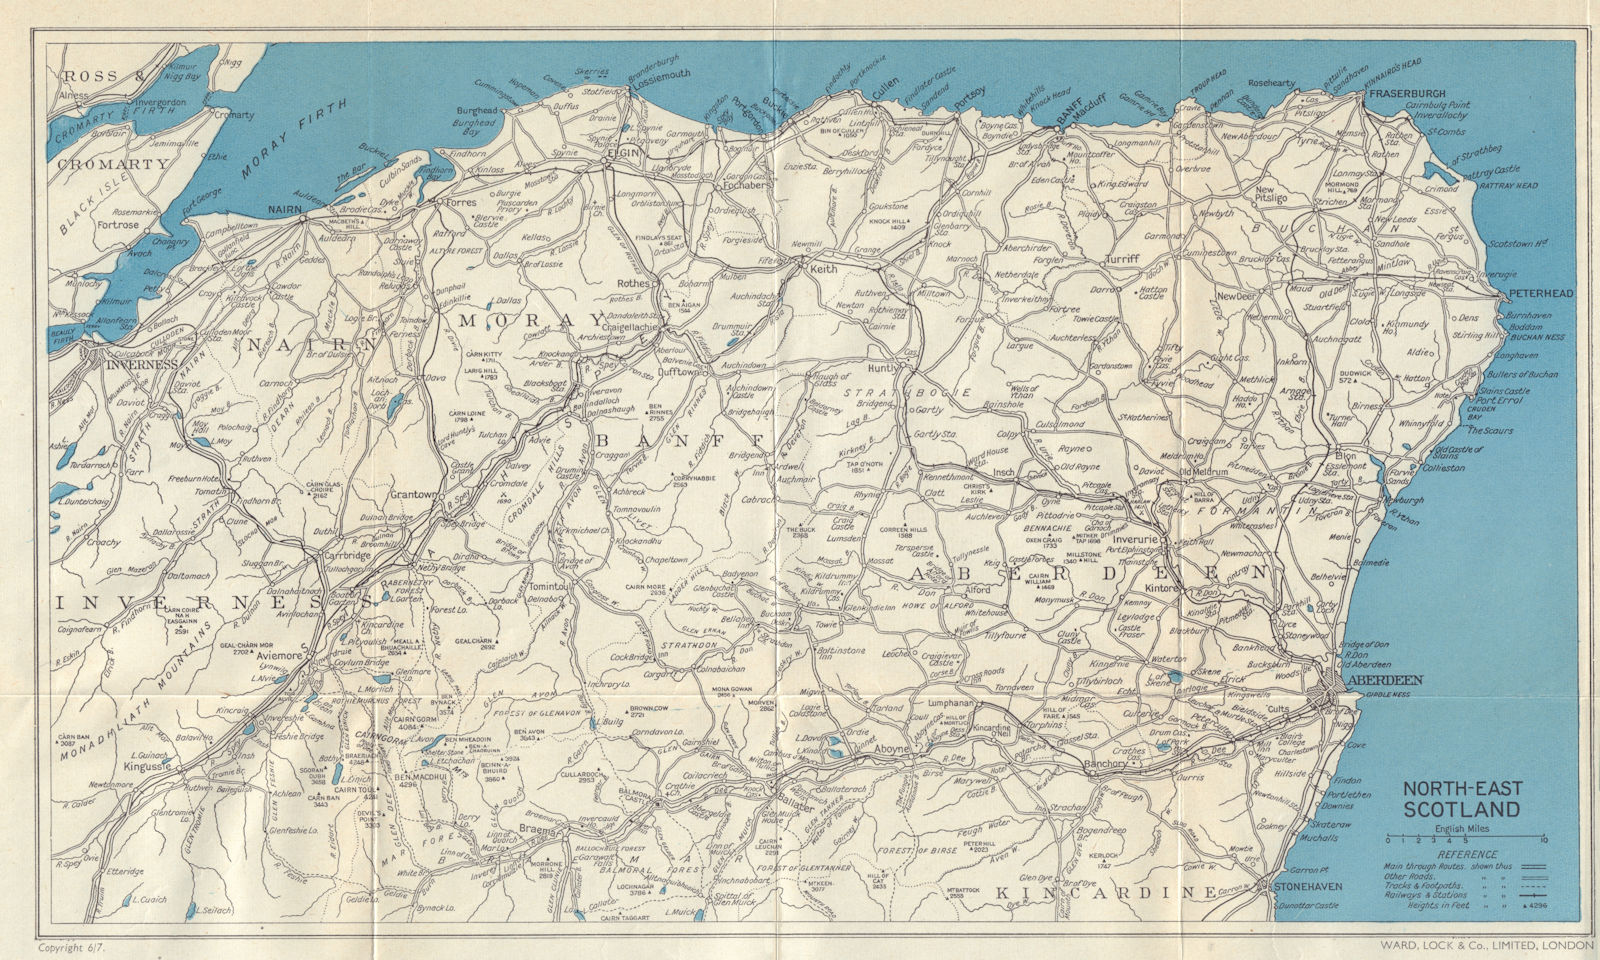 NORTH-EAST SCOTLAND. Abderdeenshire Banffshire Nairnshire Morayshire c1962 map